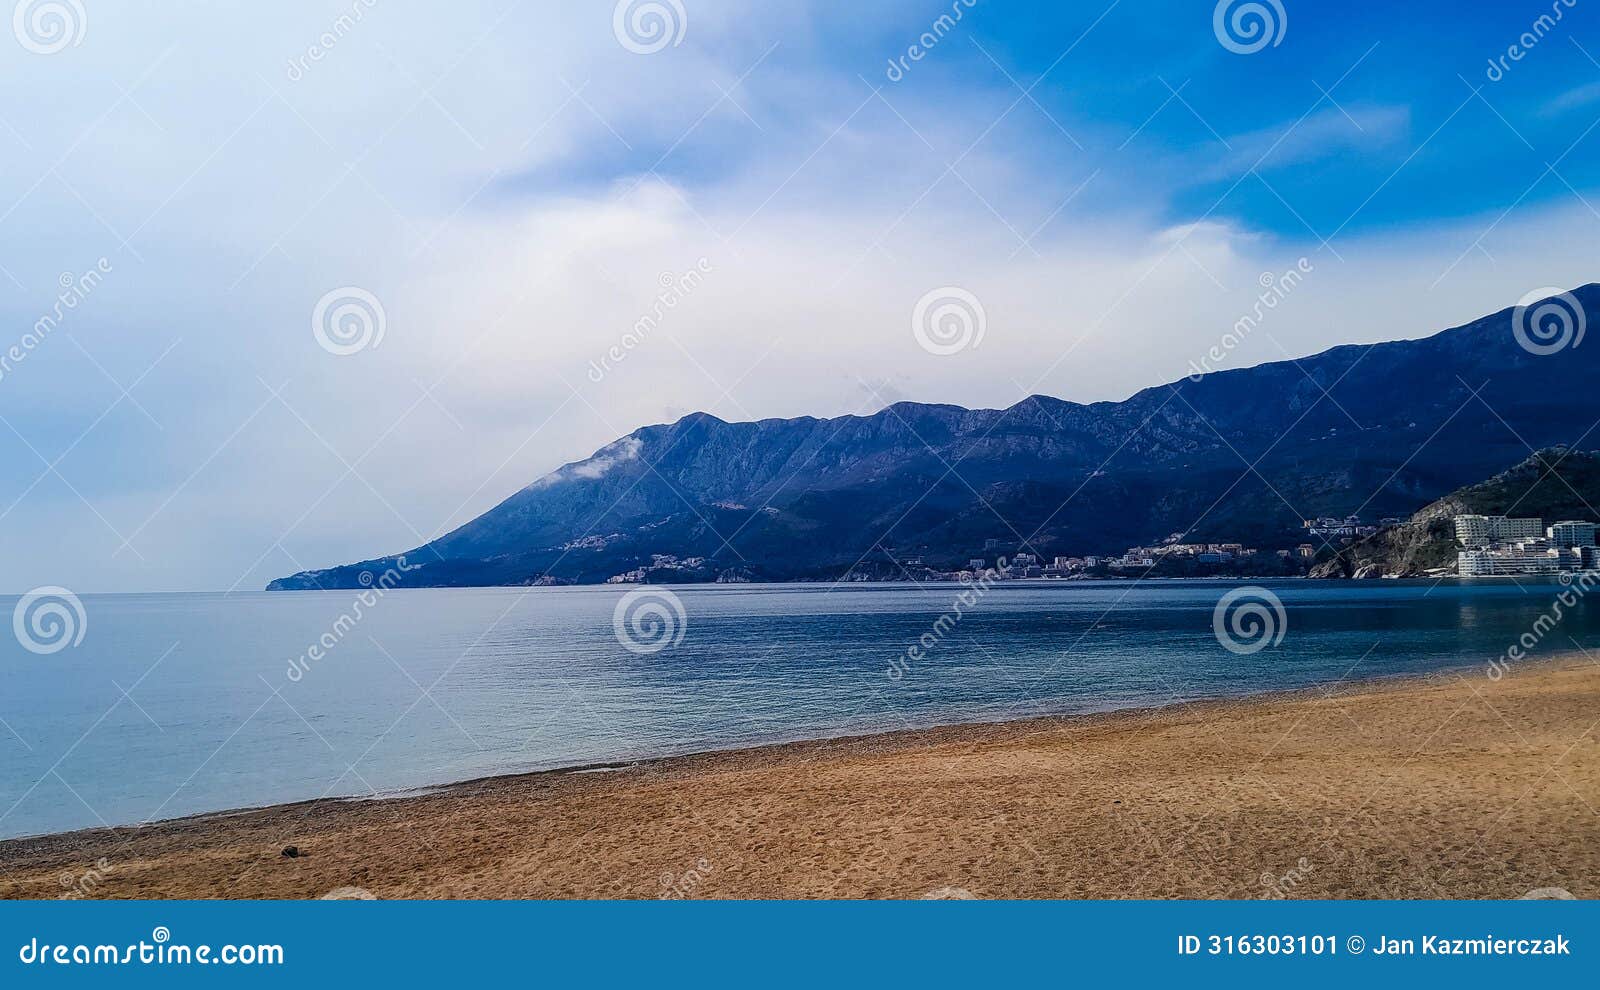 montenegrin coast in budva